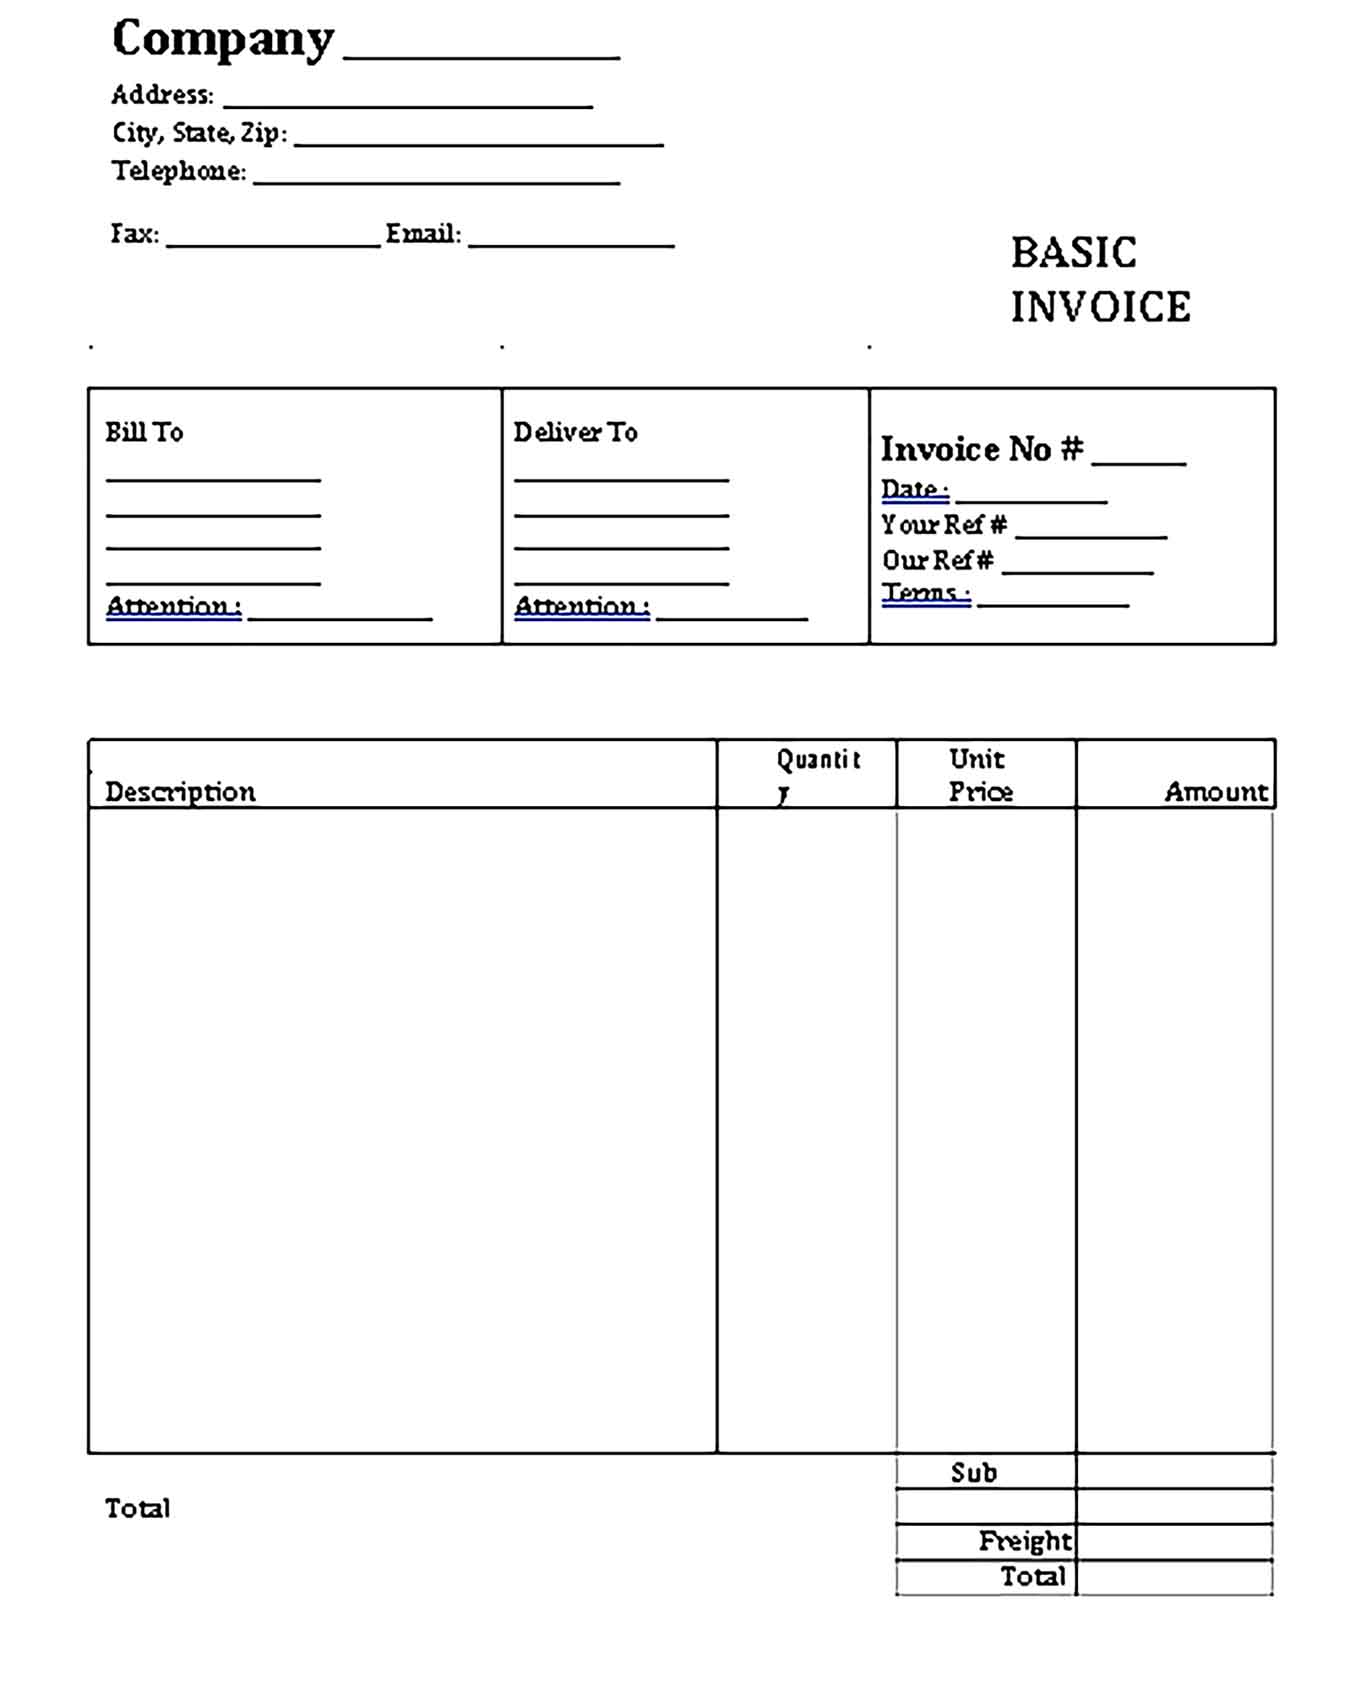 Sample Templates Basic Invoice